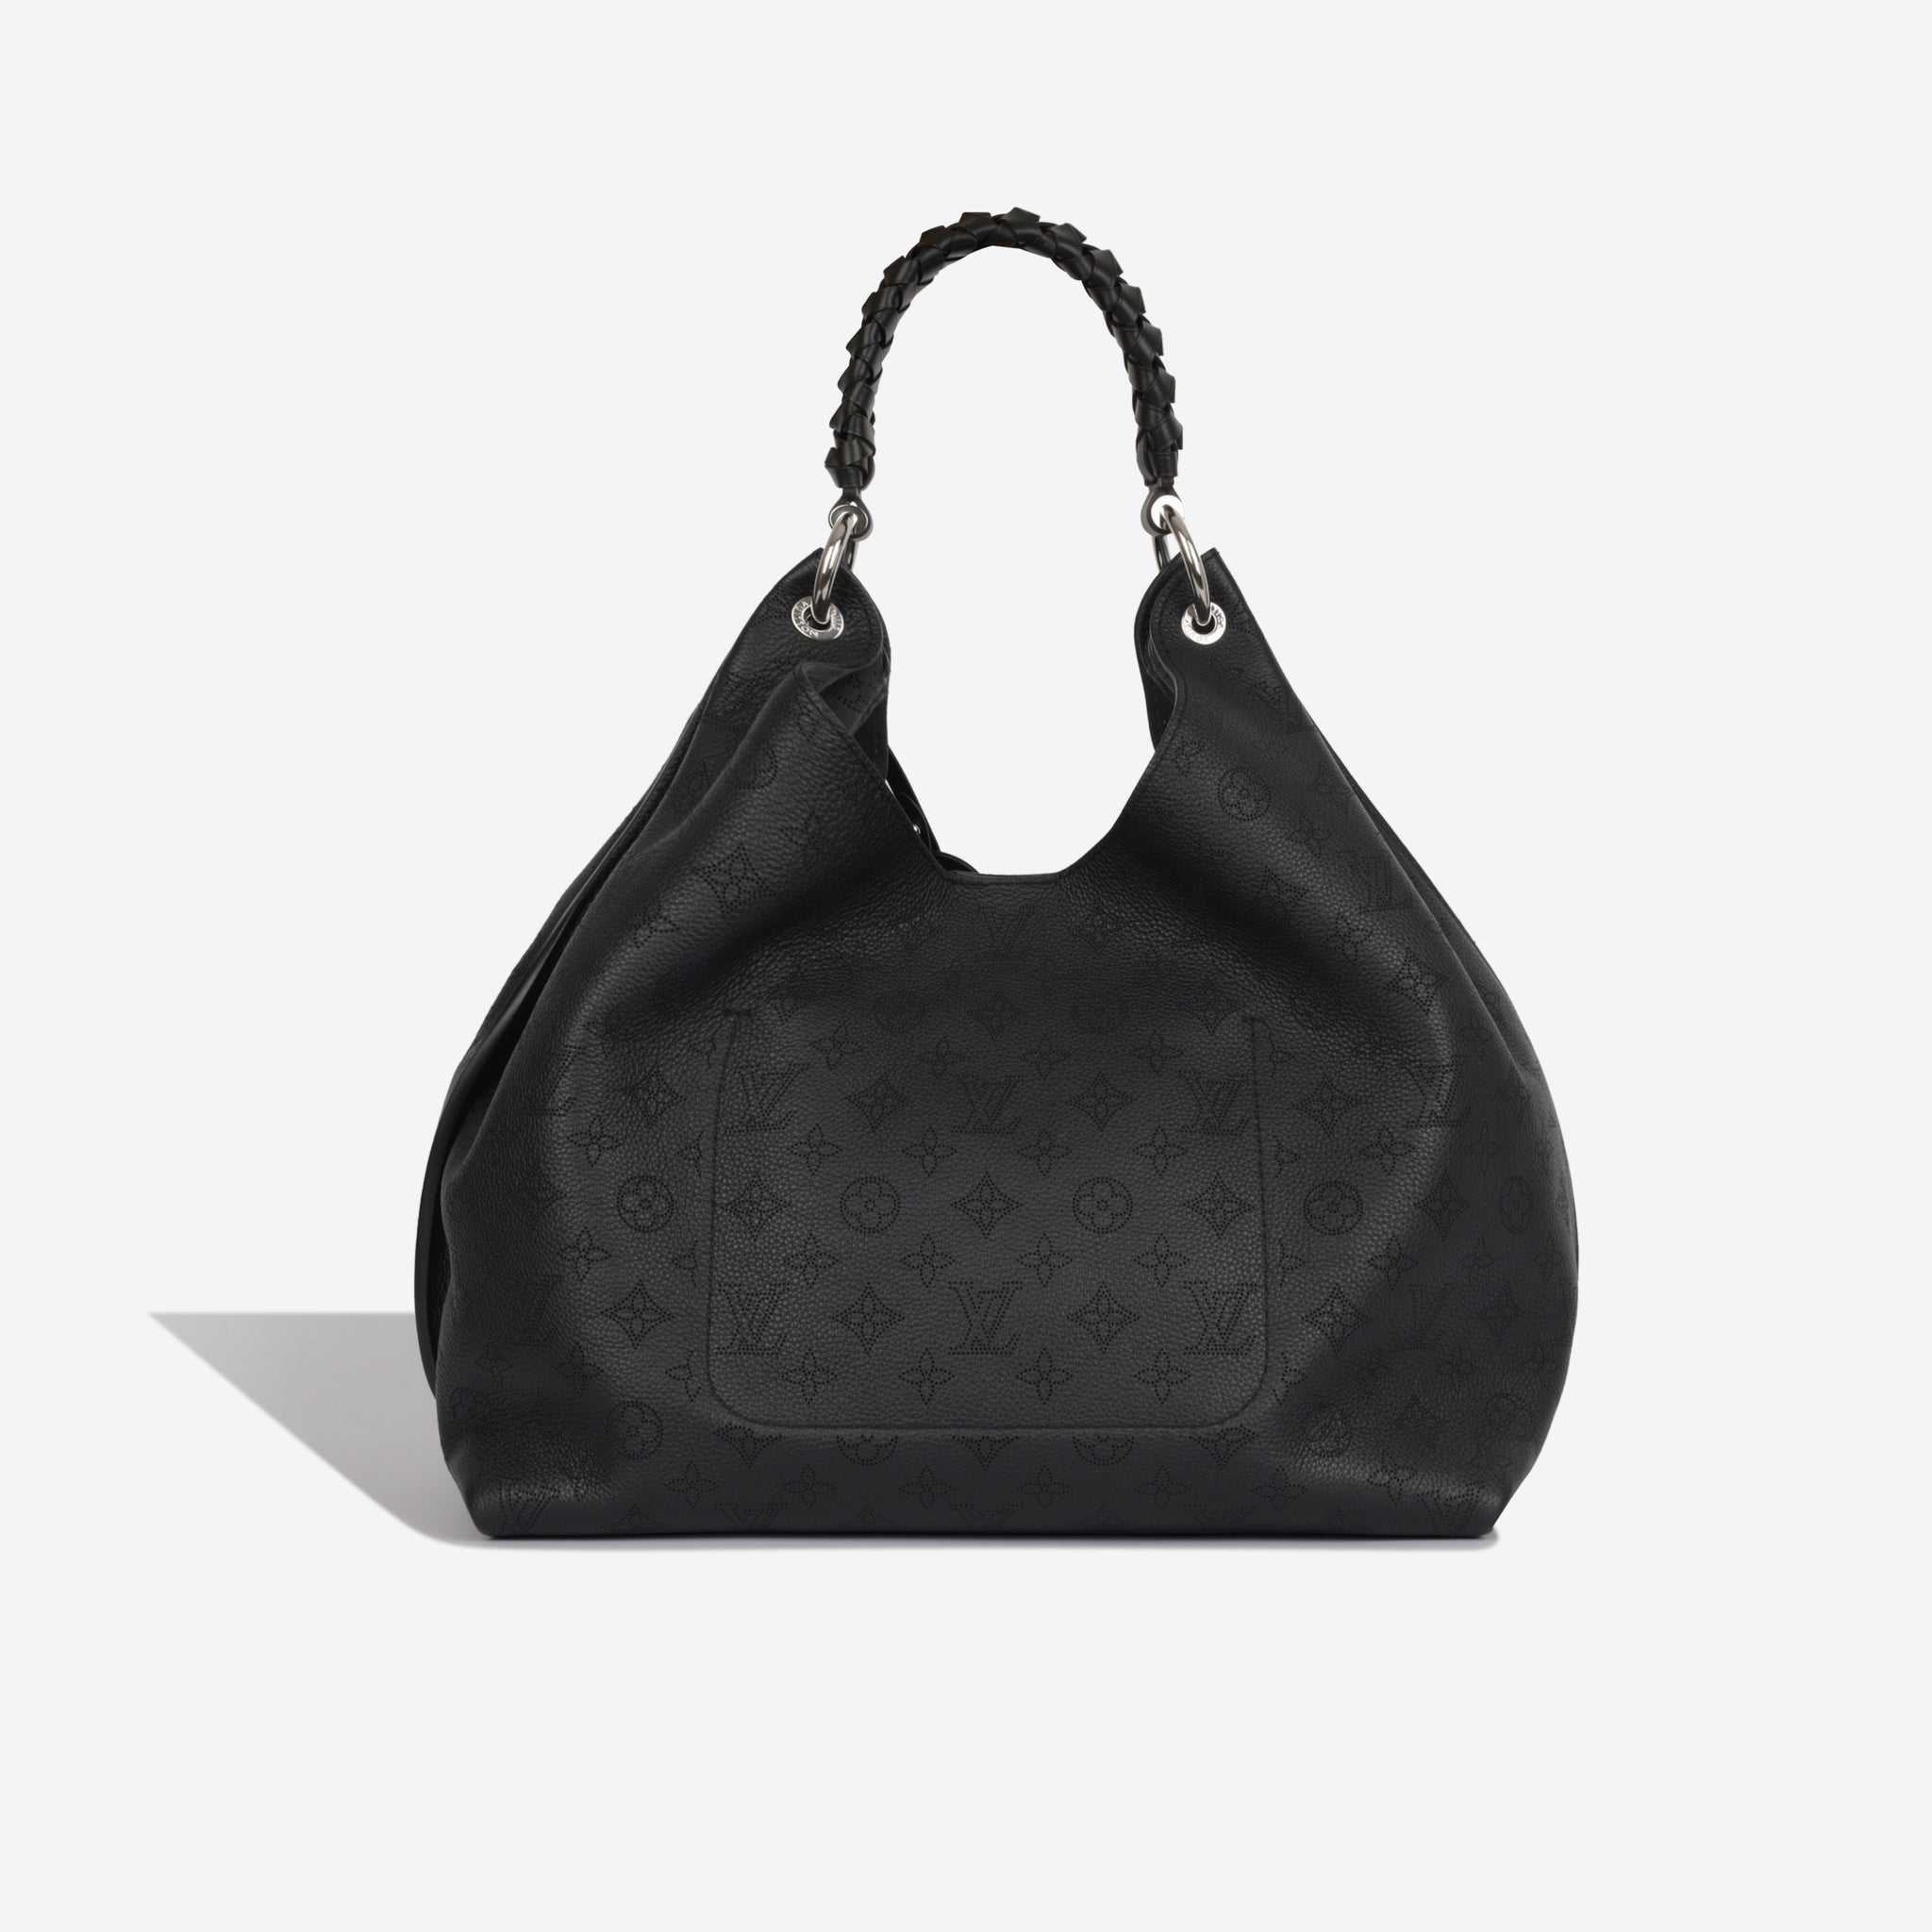 Louis Vuitton Carmel Bag Reviewer